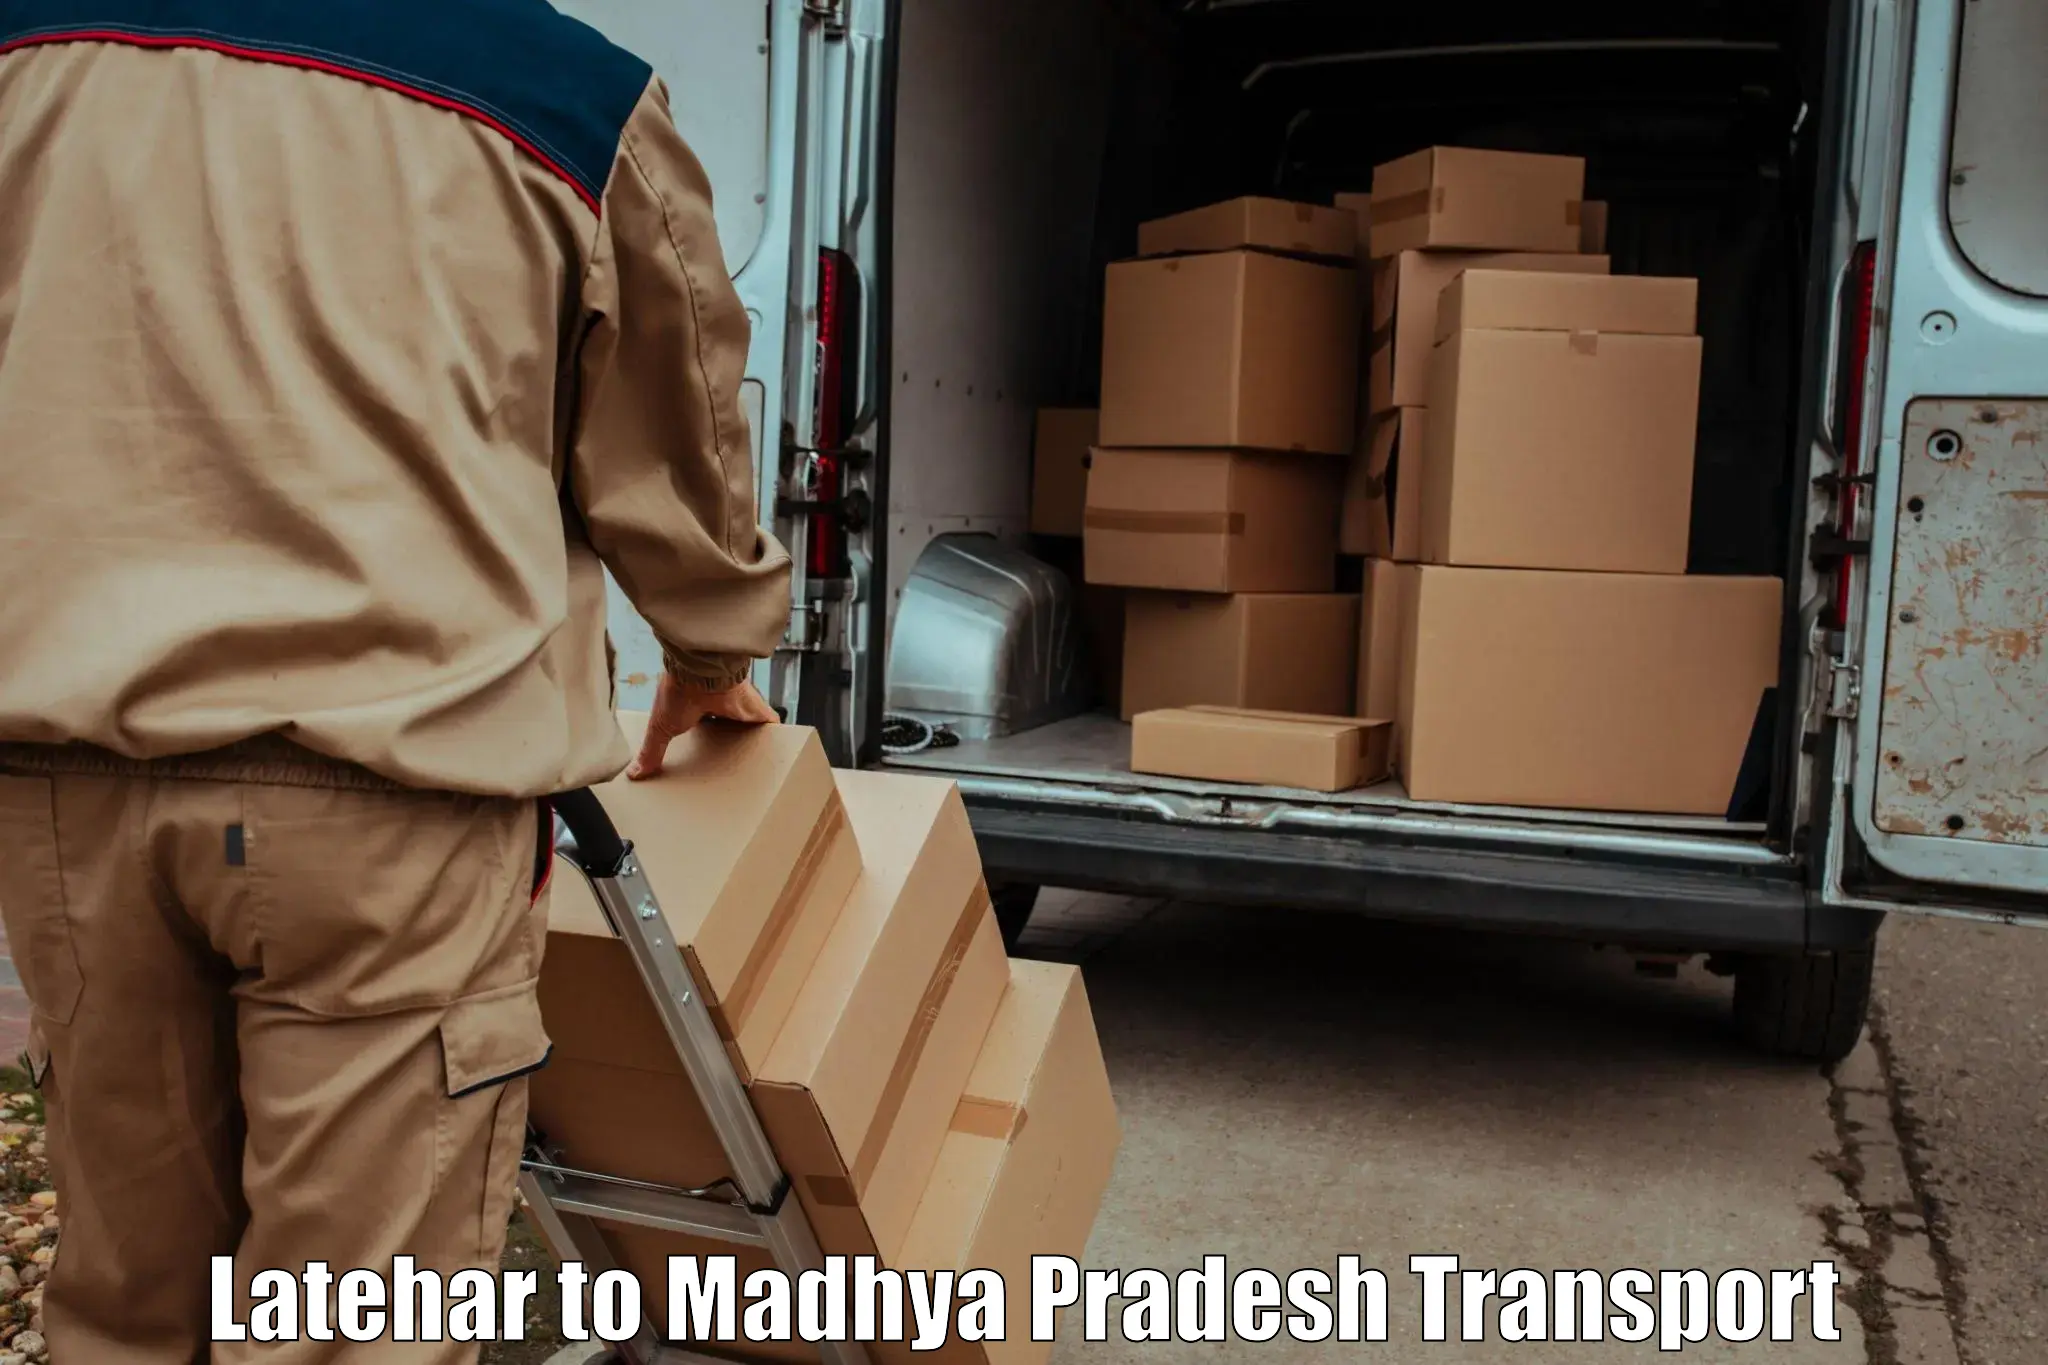 Truck transport companies in India Latehar to Garh Rewa